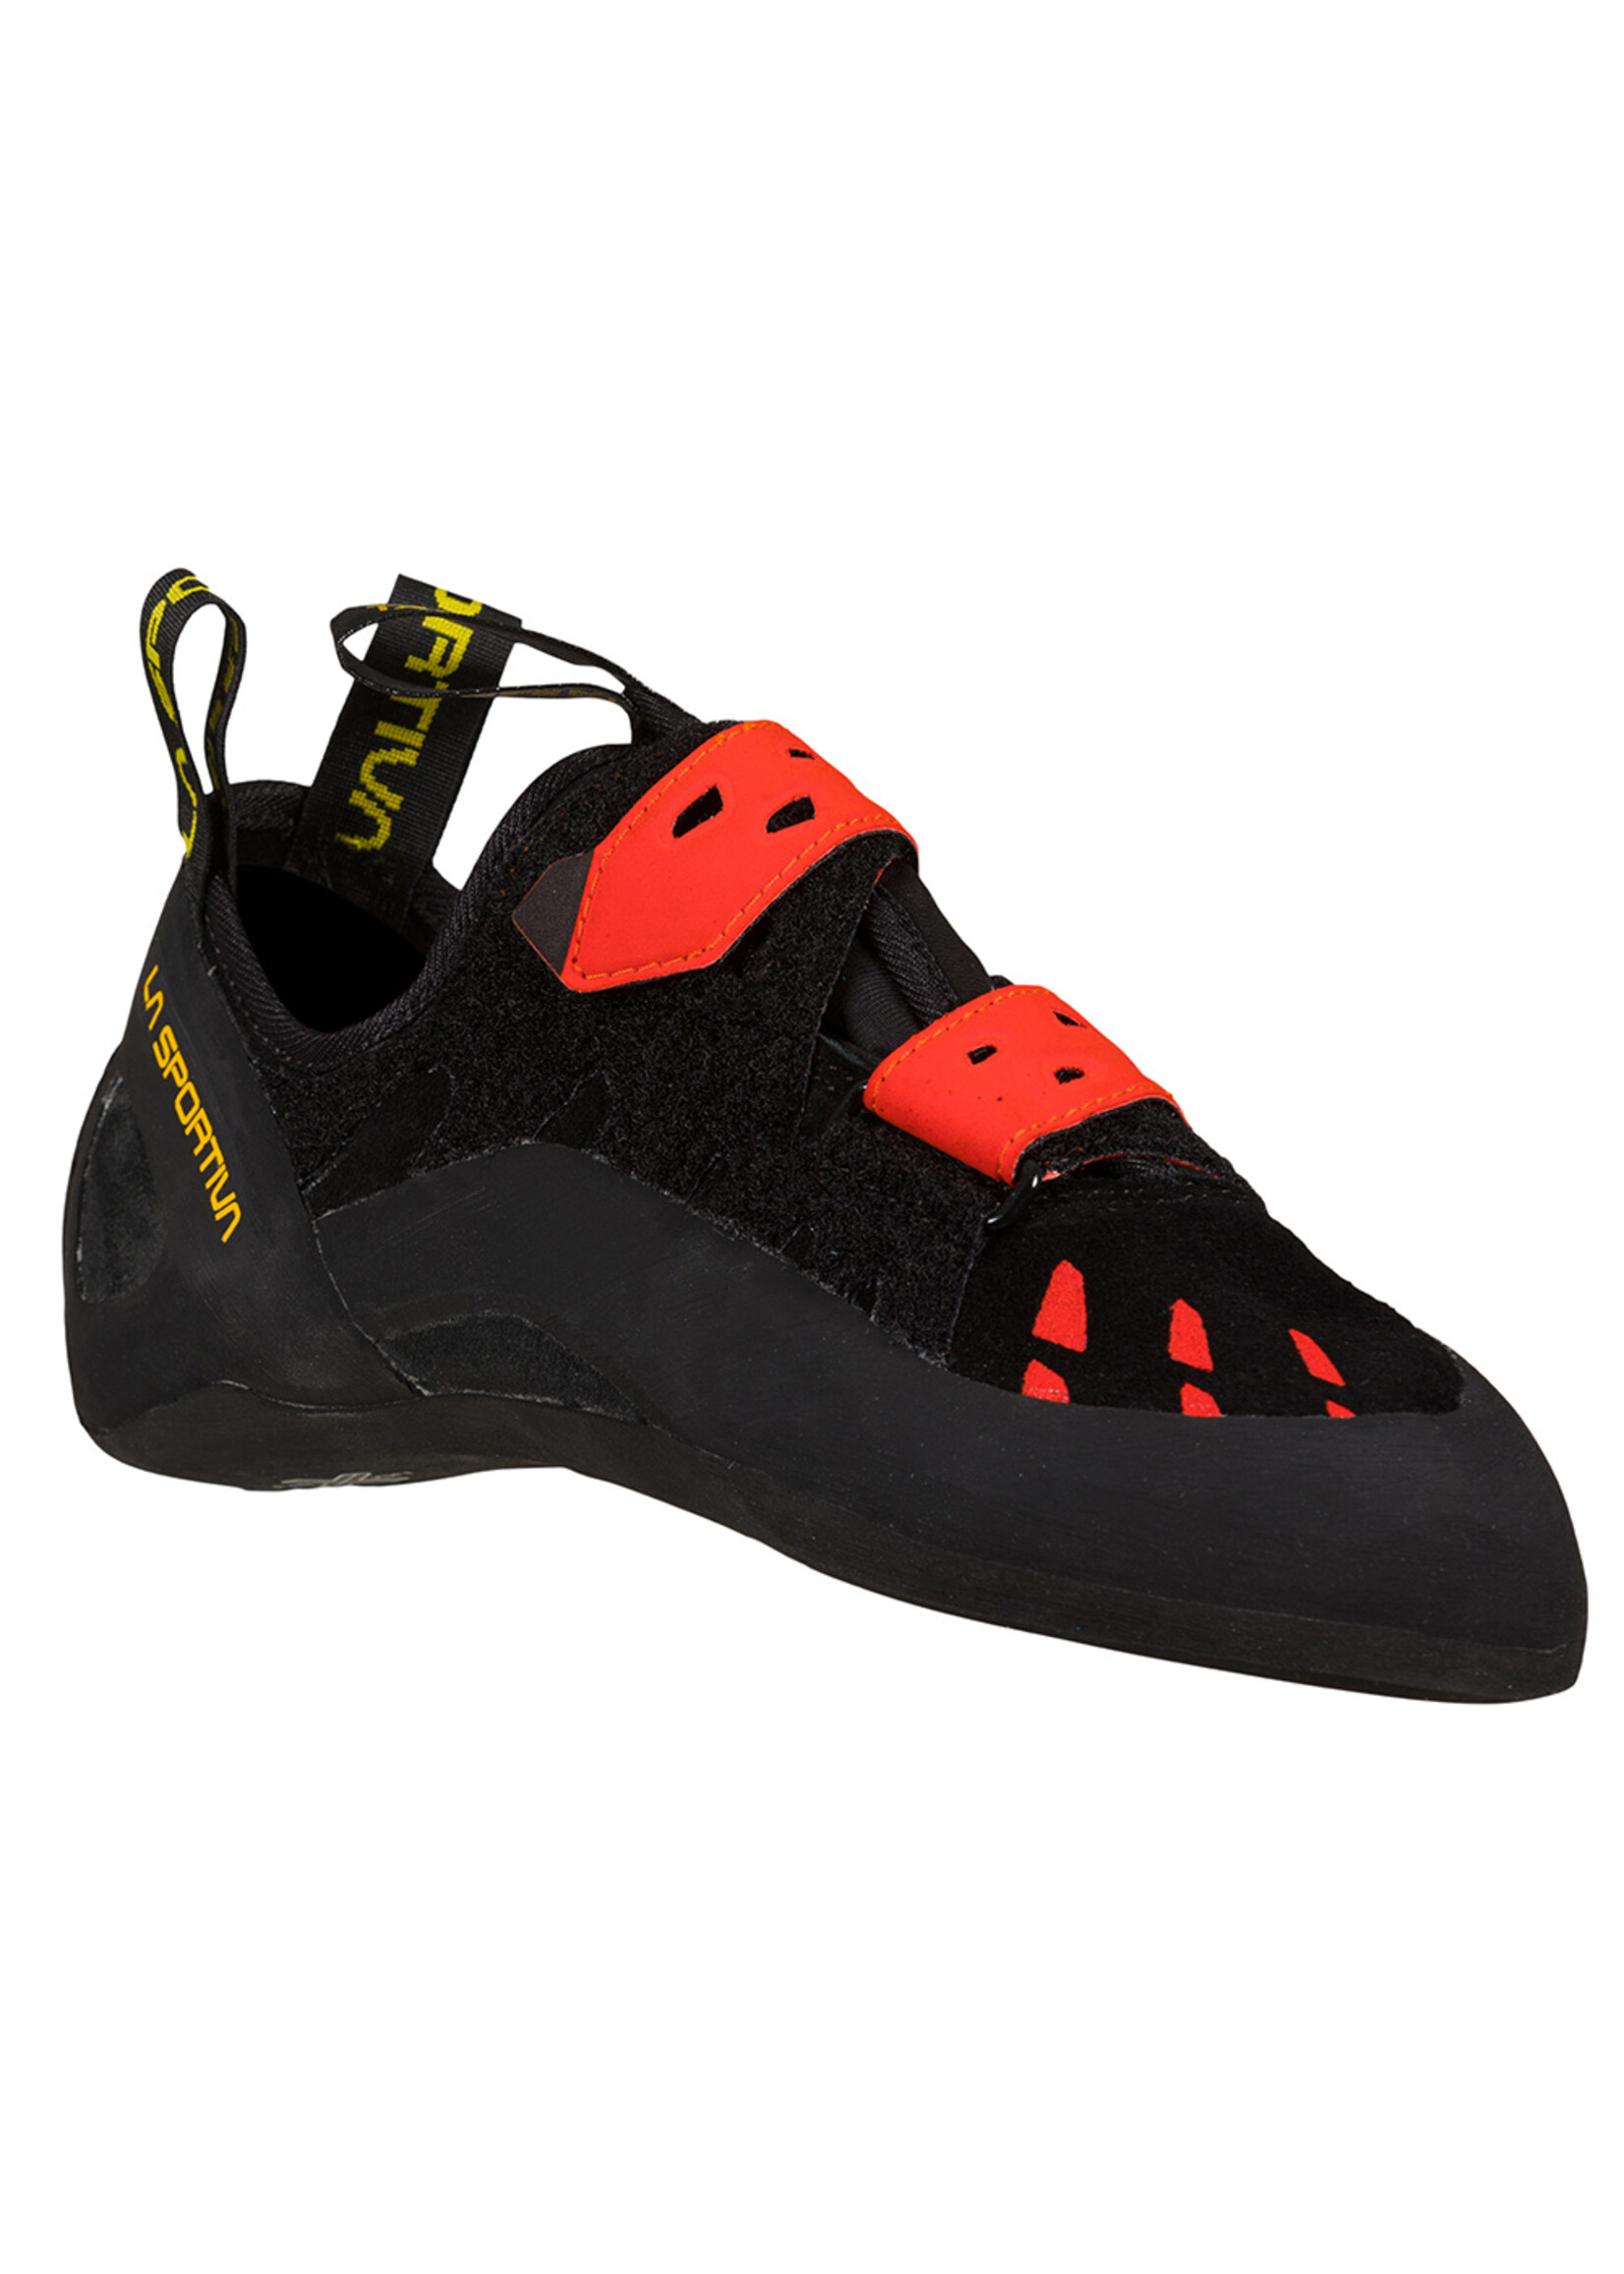 La Sportiva Mens Tarantula Climbing Shoe - Black/Poppy